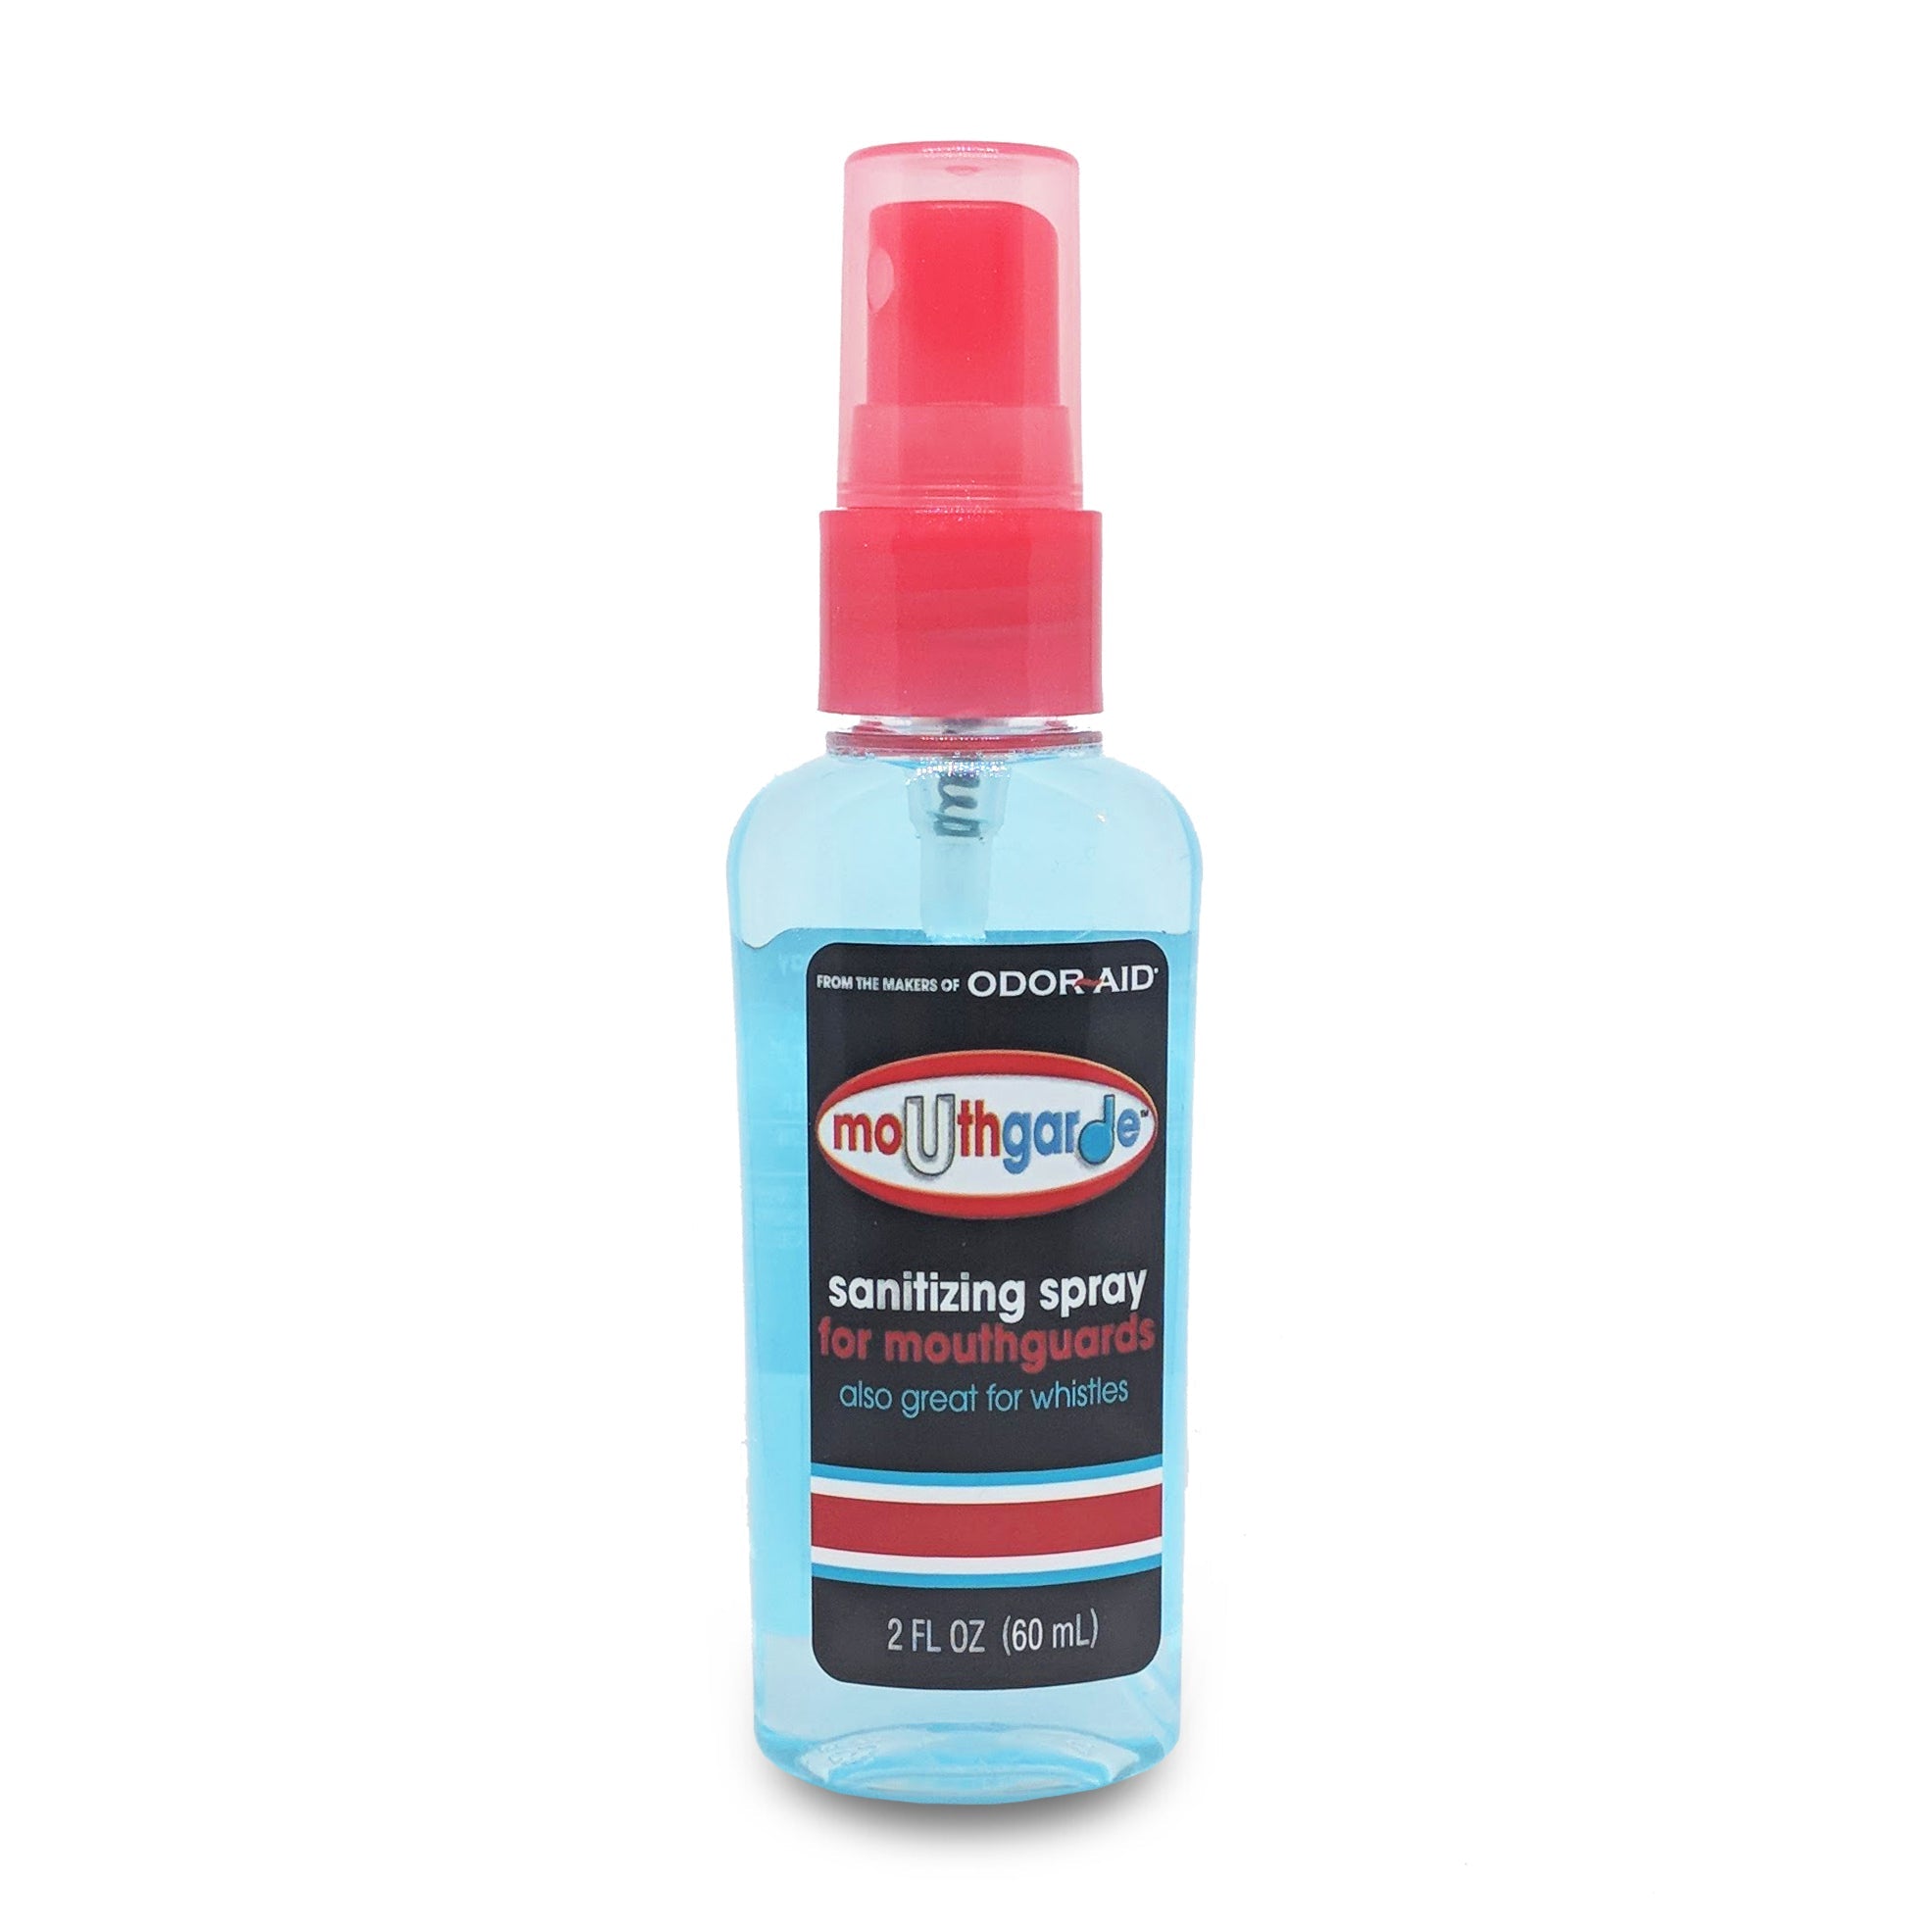 mouthguard-sanitizing-spray